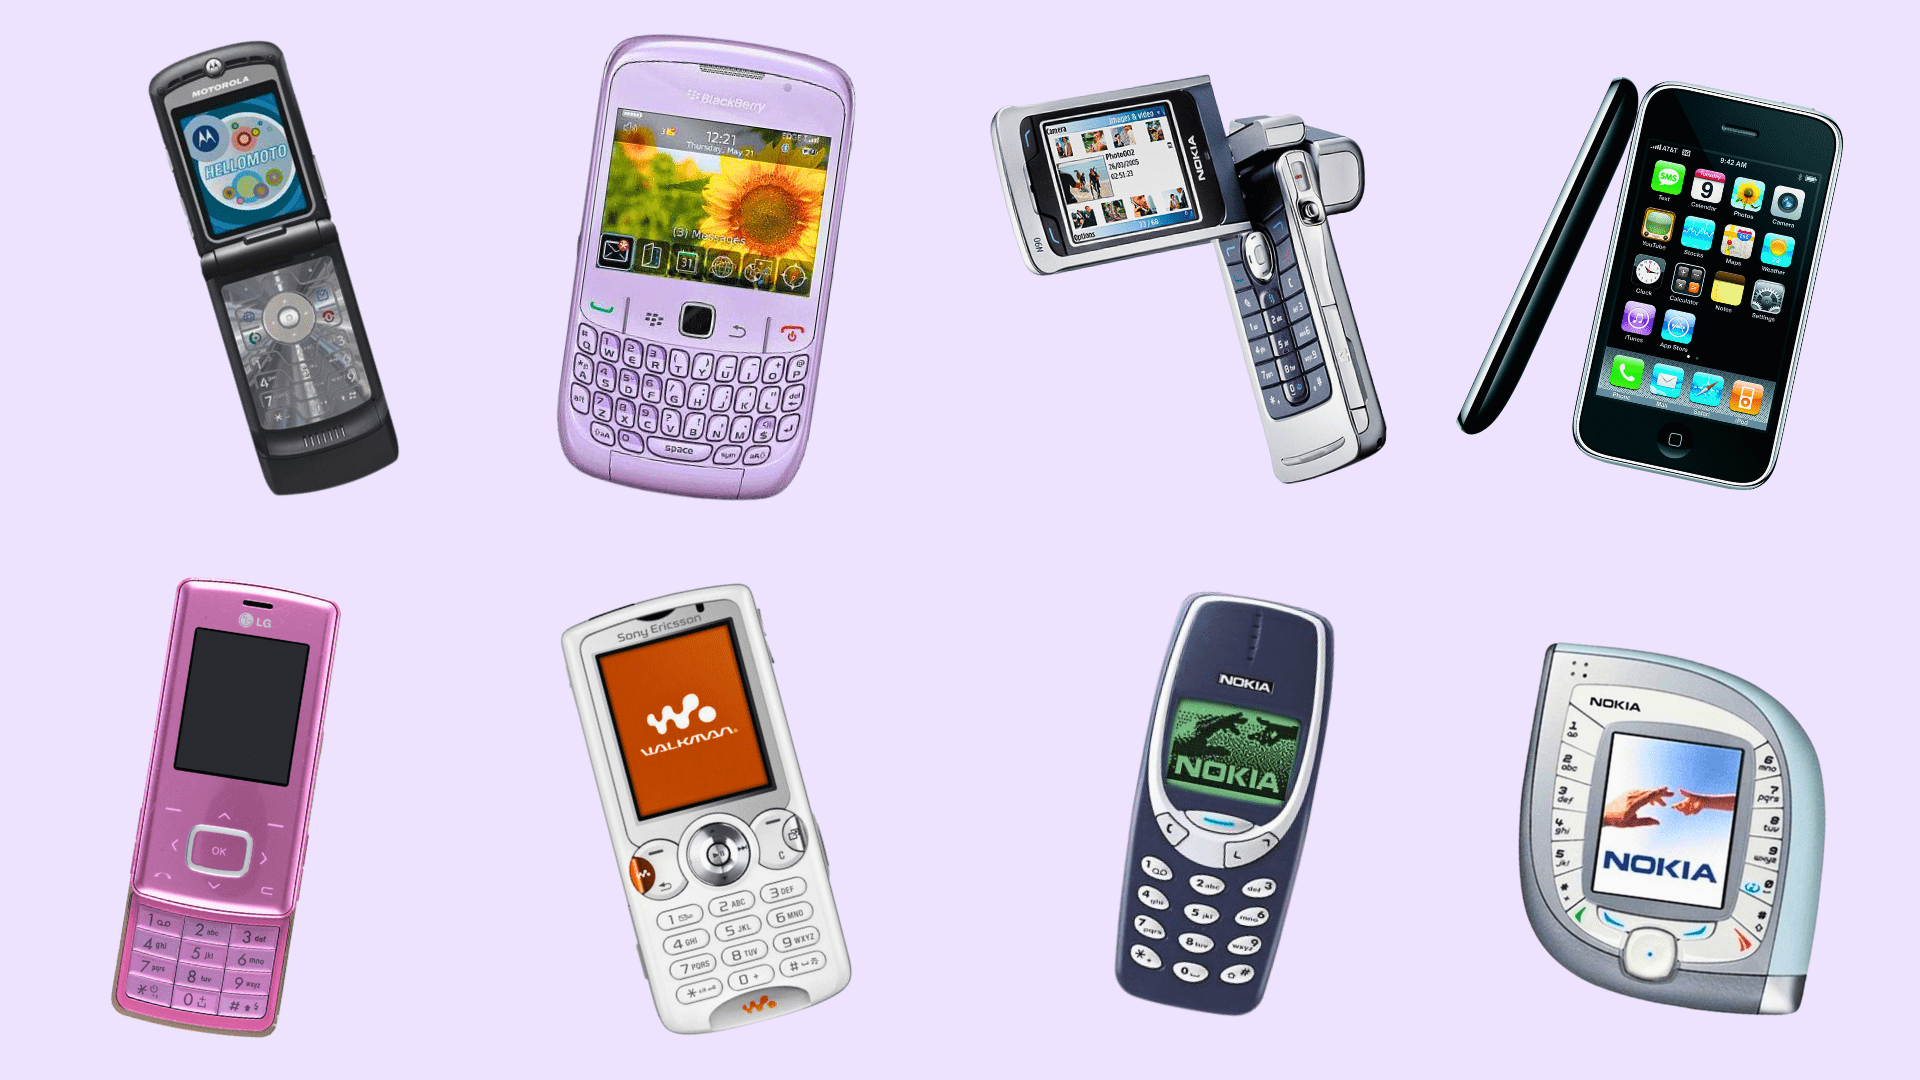 Classic Phones From The 2000s - Motorola Razr to the LG Chocolate: Classic Phones We Miss From The 2000s